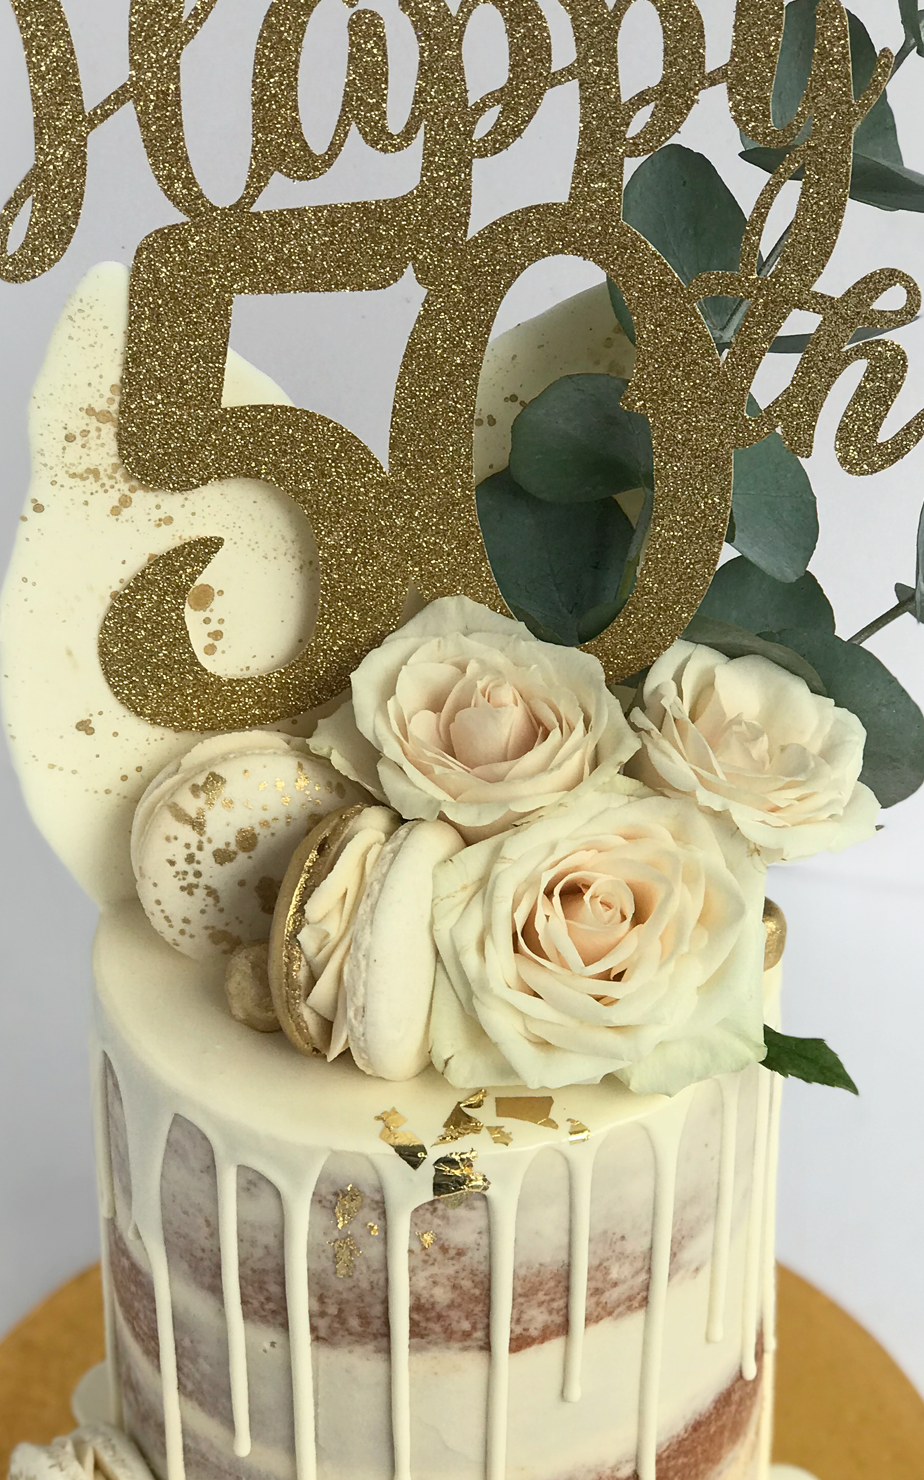 Mens birthday cake, Luxury celebration cakes - Antonia's Cakes